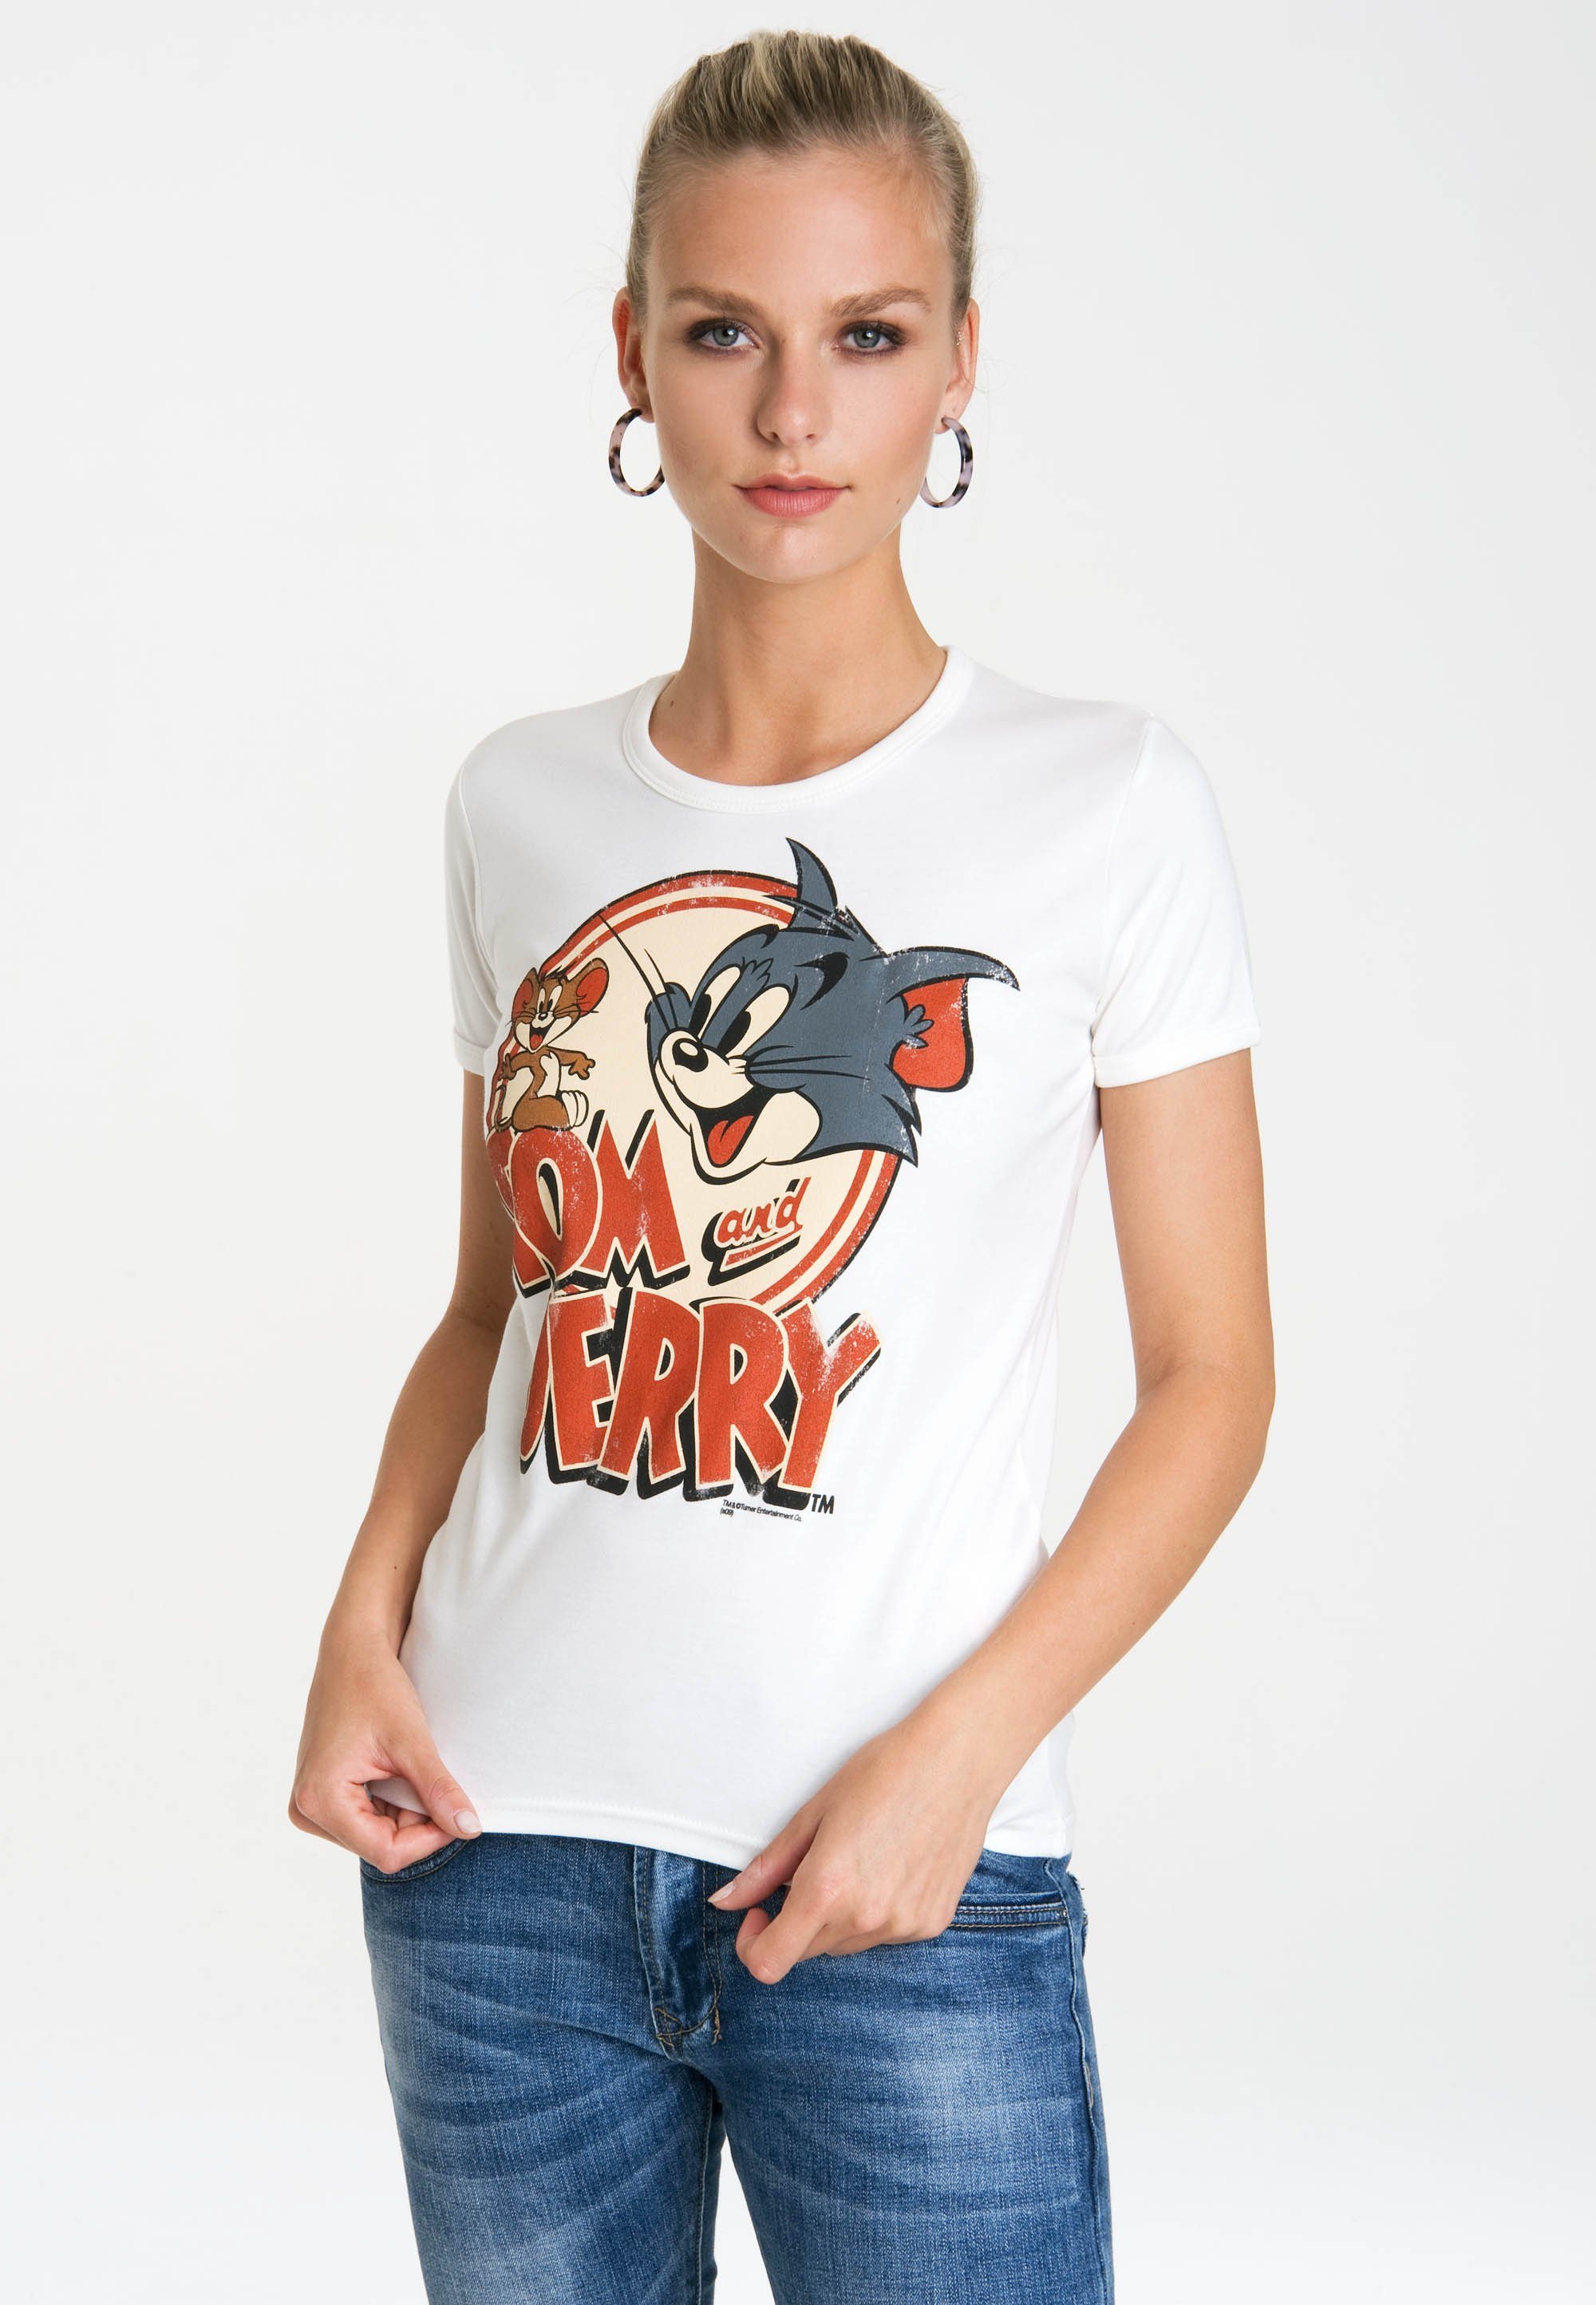 & Jerry-Logo Originaldesign lizenziertem mit Tom T-Shirt LOGOSHIRT